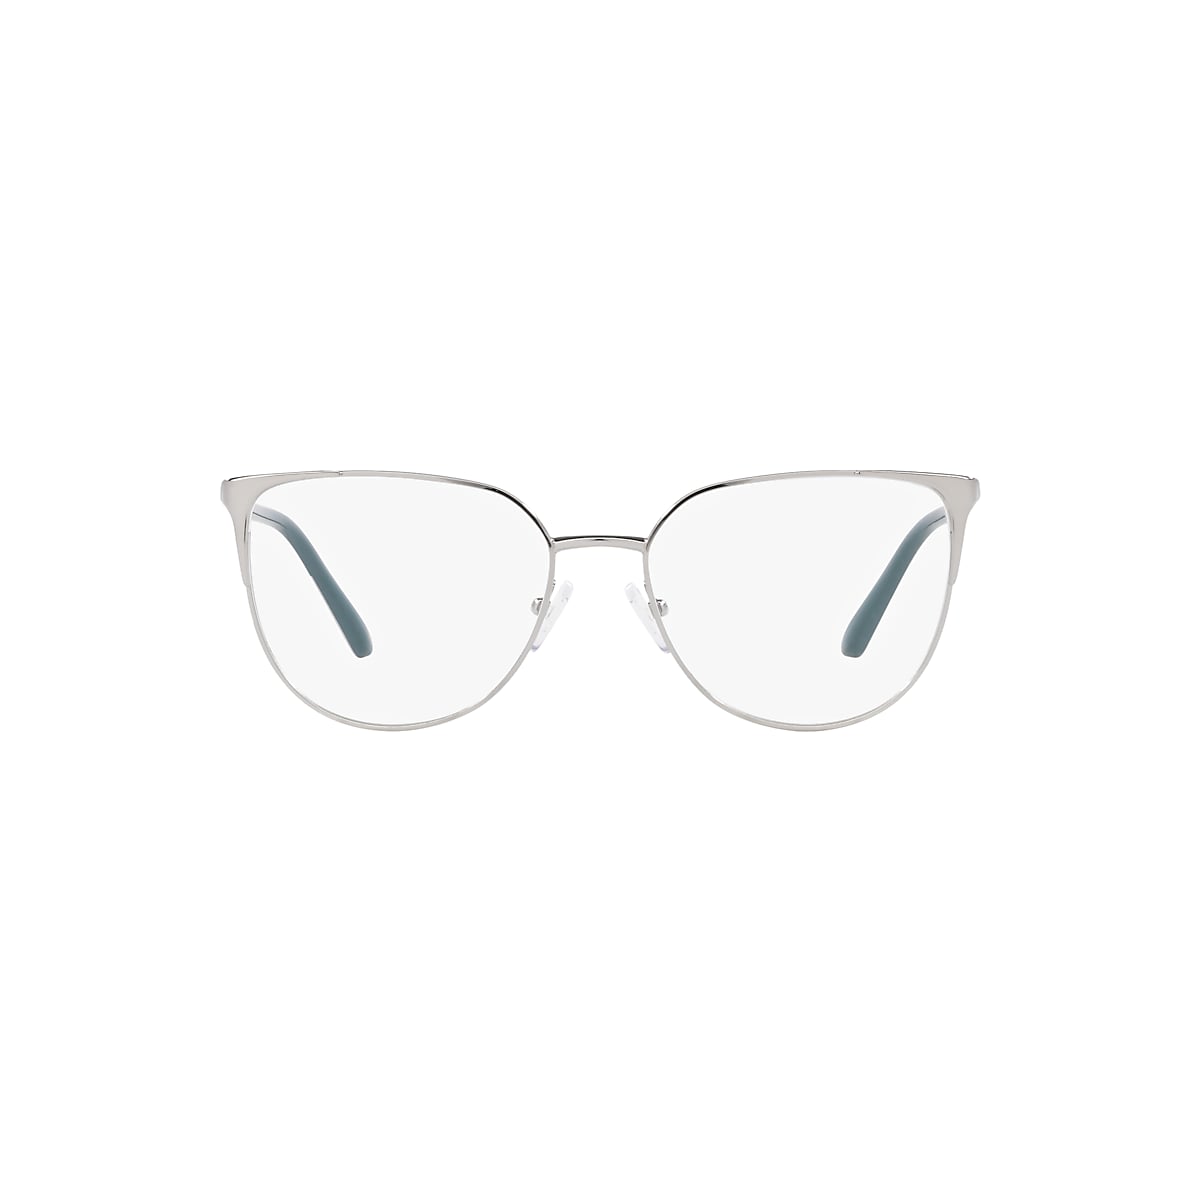 Exchange AX1058 | LensCrafters Armani Eyeglasses